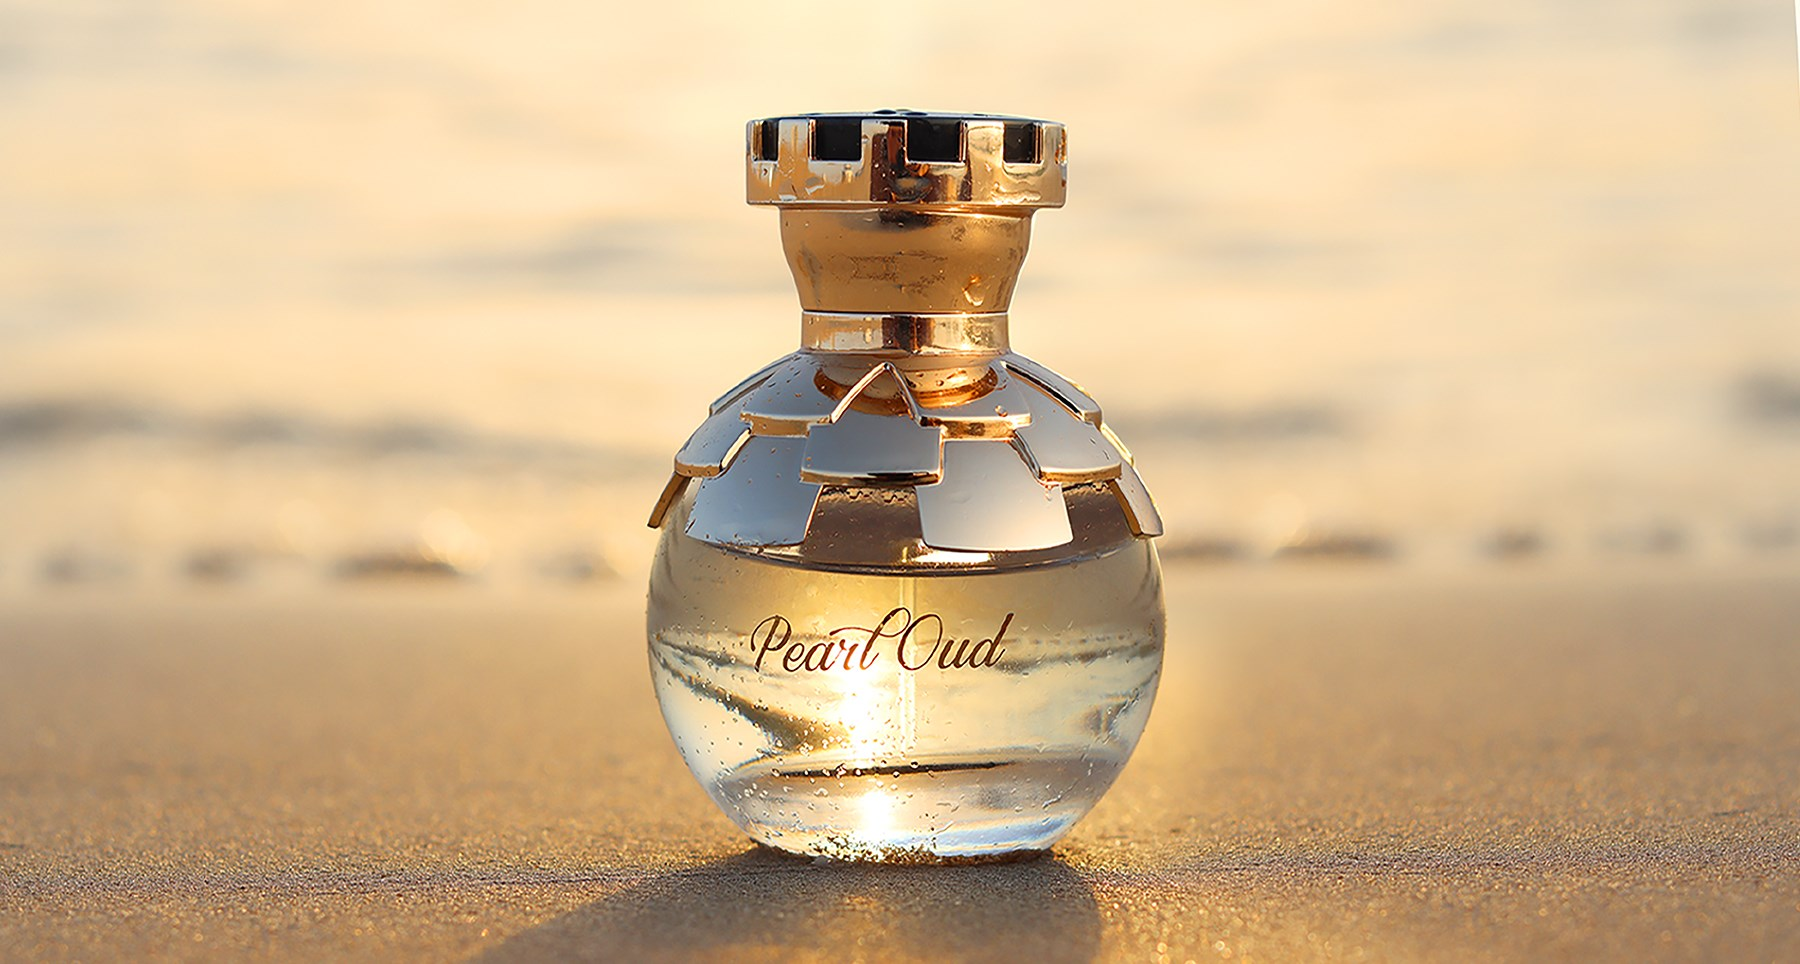 Ahmed Al Maghribi Perfumes